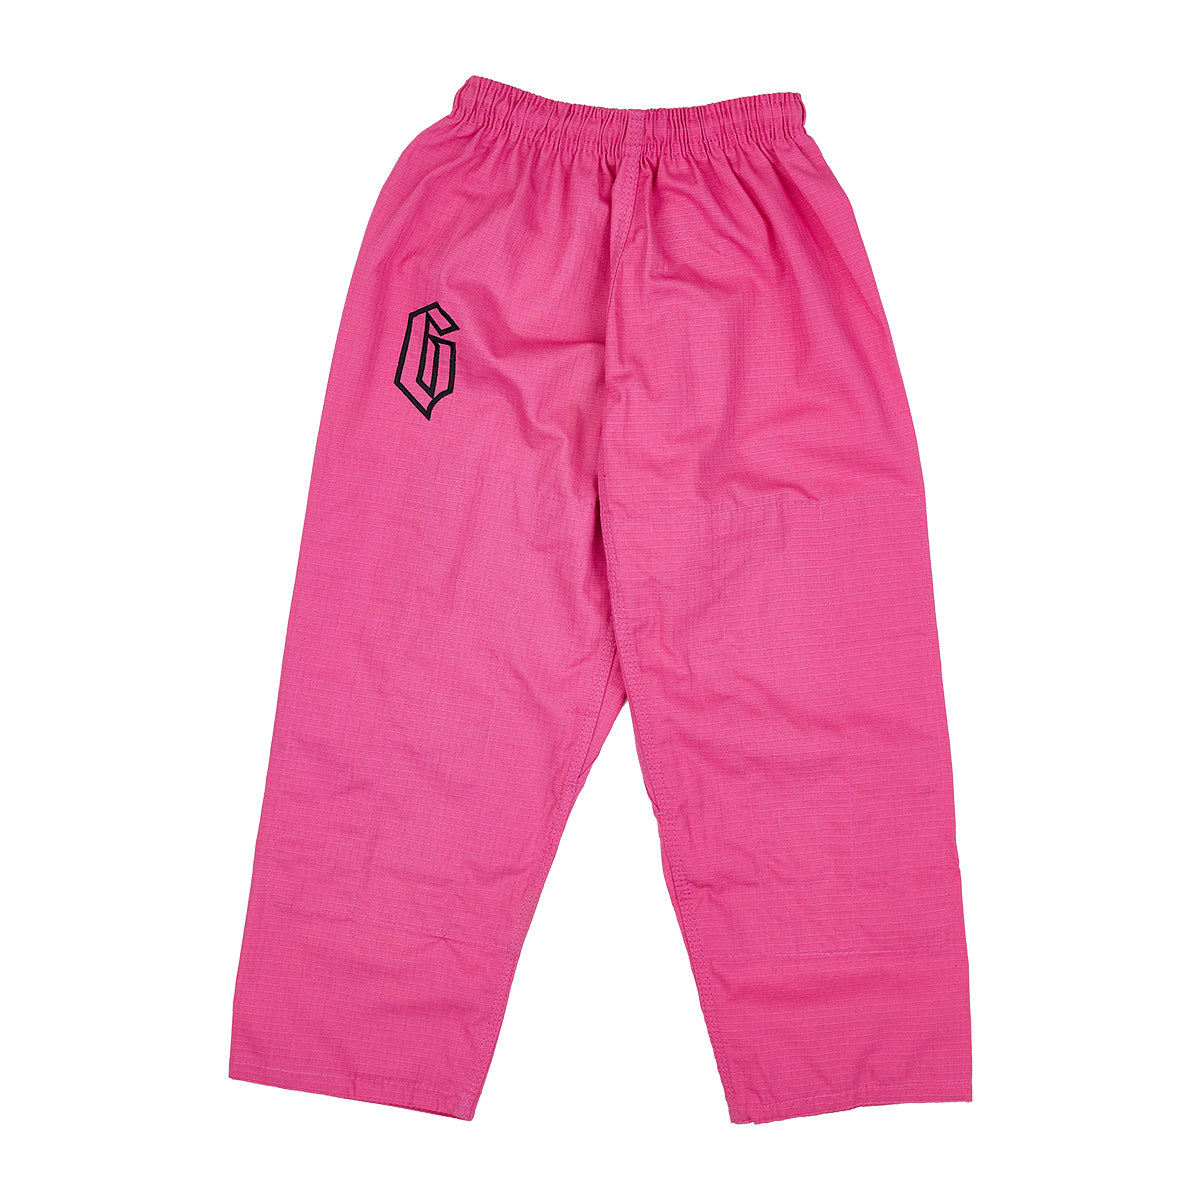 Gameness Youth Elastic Gi Pants Pink